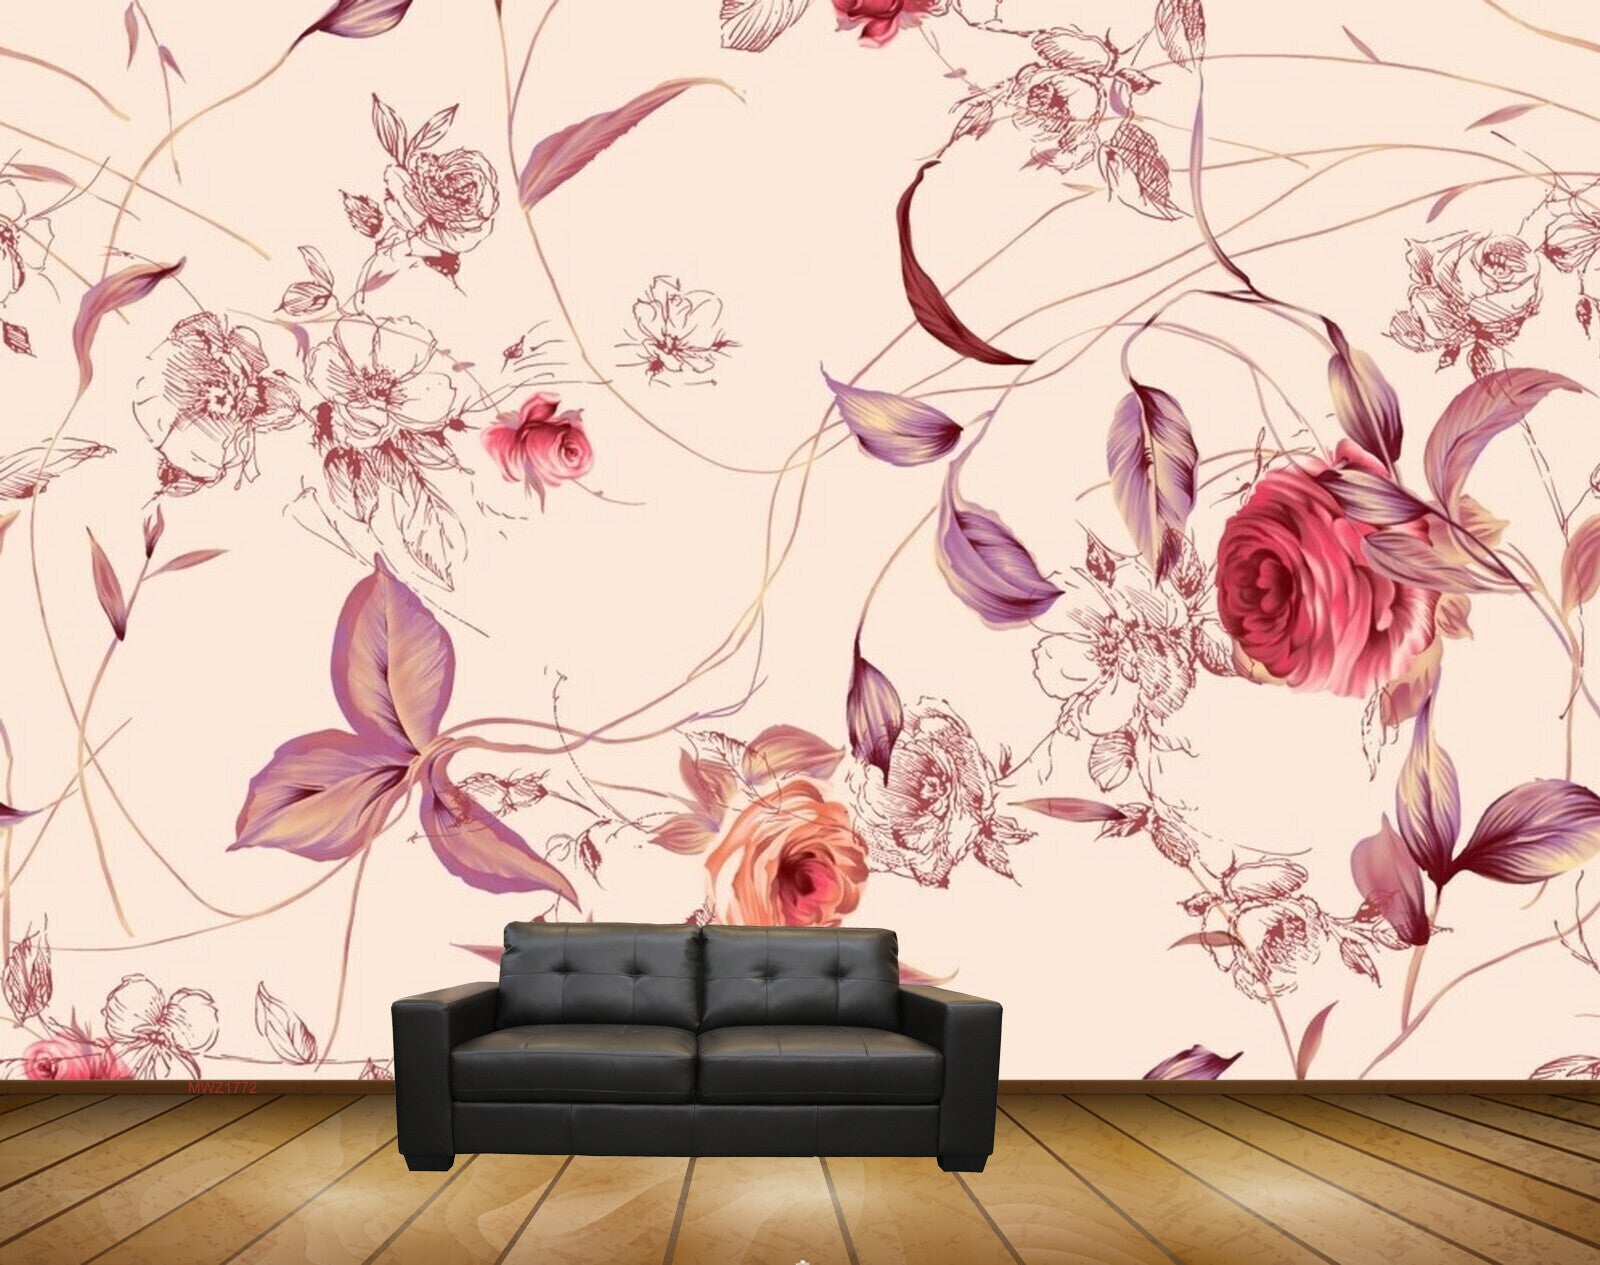 Avikalp MWZ1772 Pink White Flowers Leaves 3D HD Wallpaper